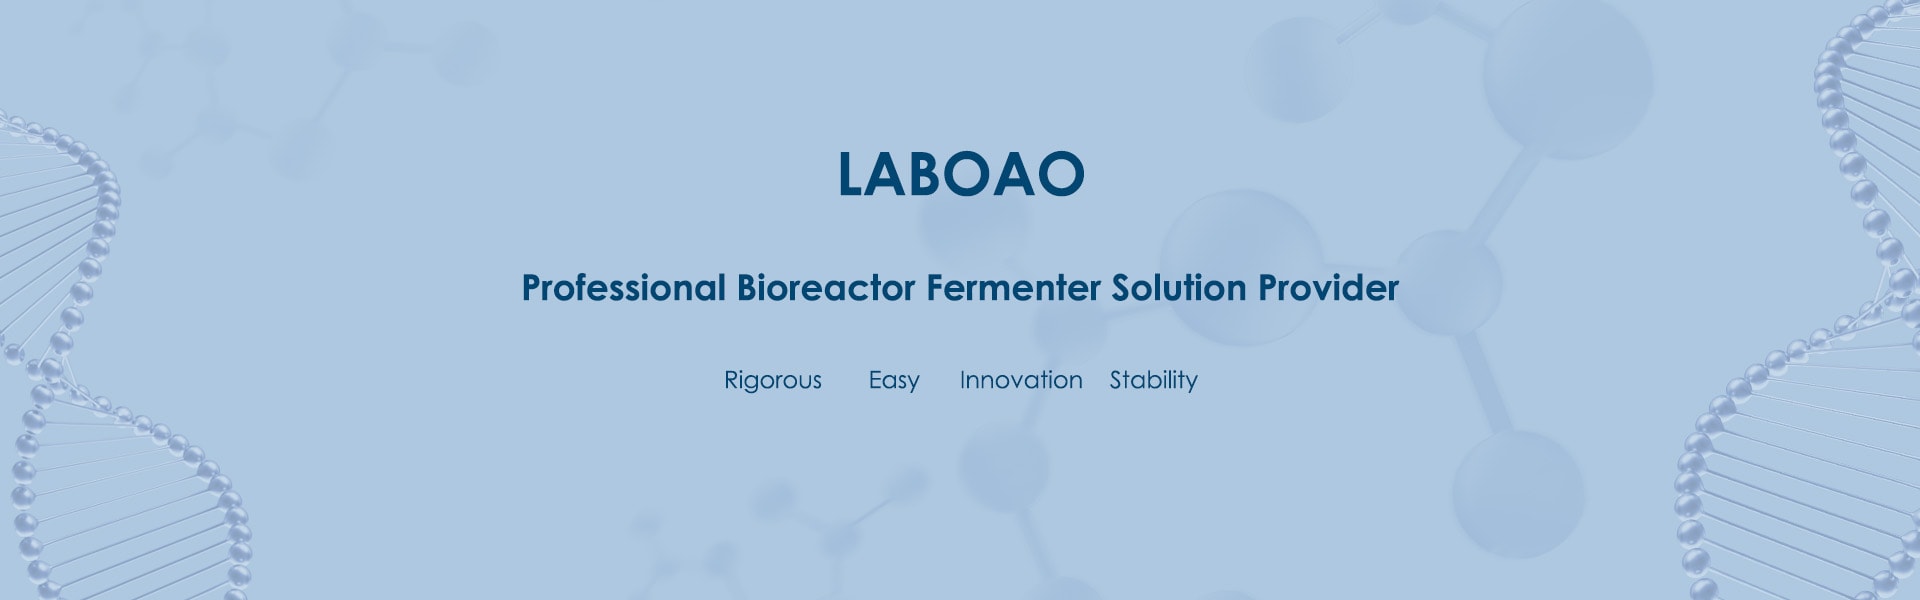 banner of bioreactor & fermenter manufacture